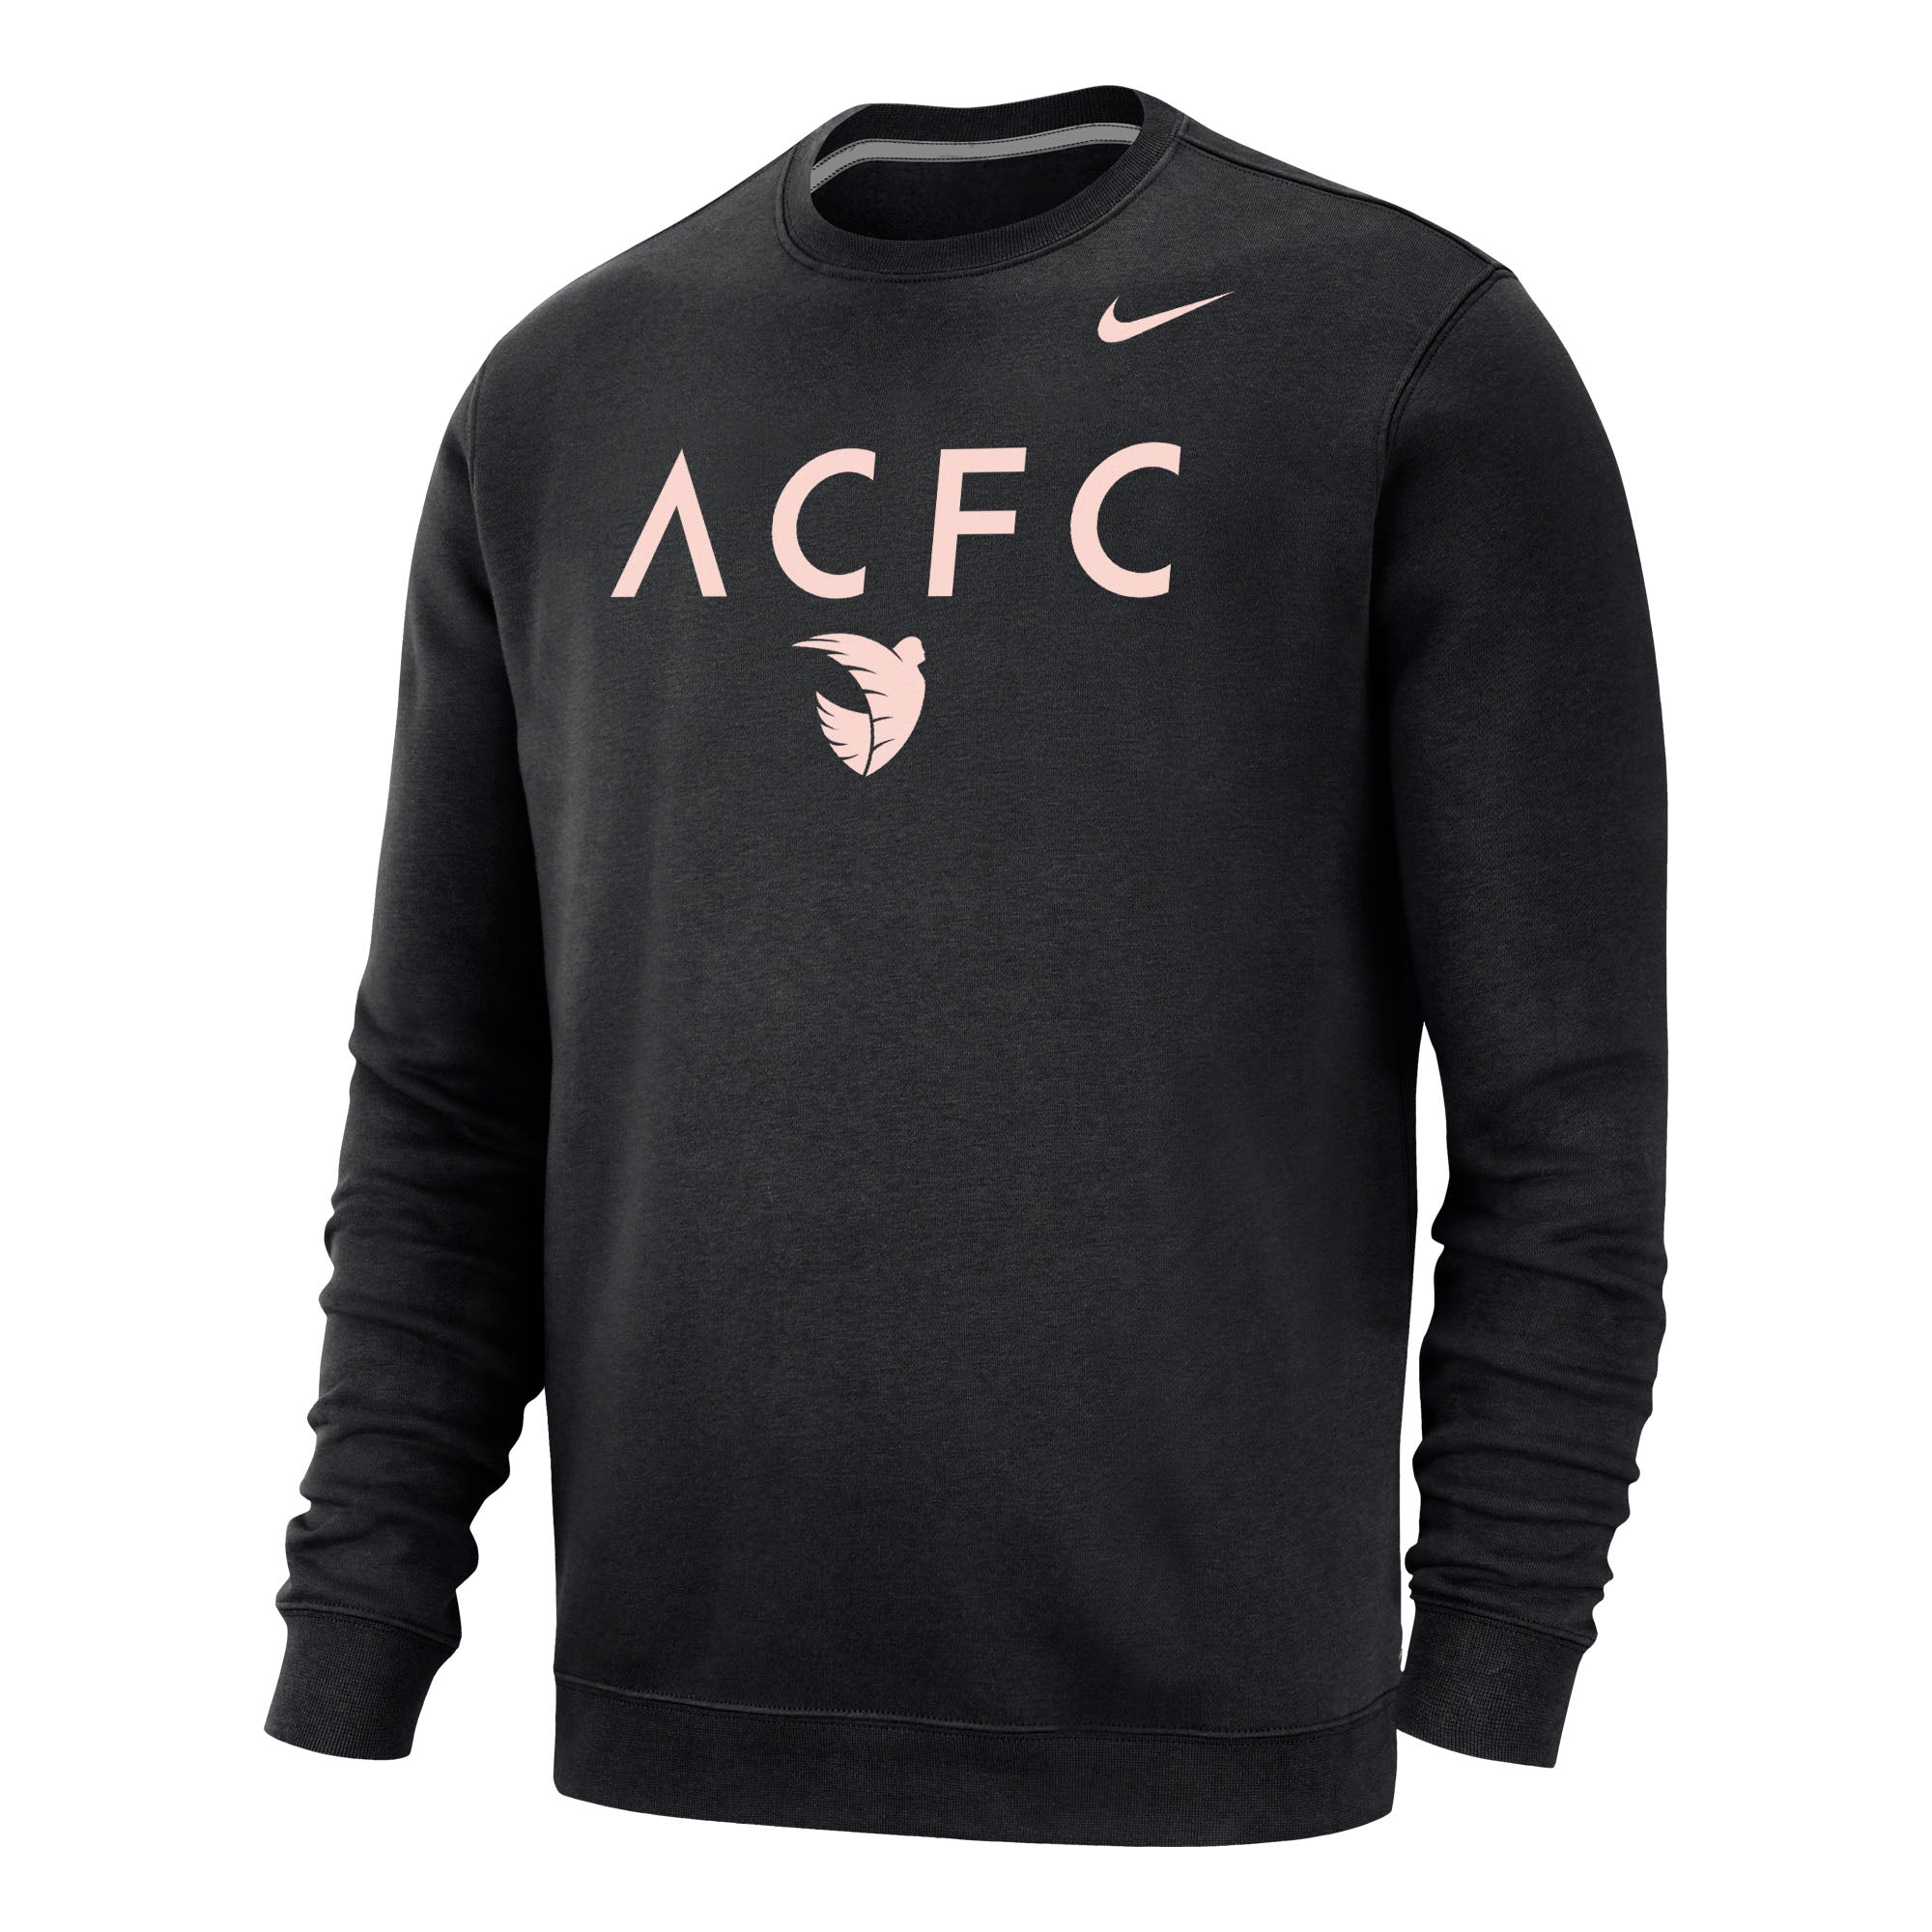 ACFC Nike Unisex Sol Rosa Black Club Fleece Crew